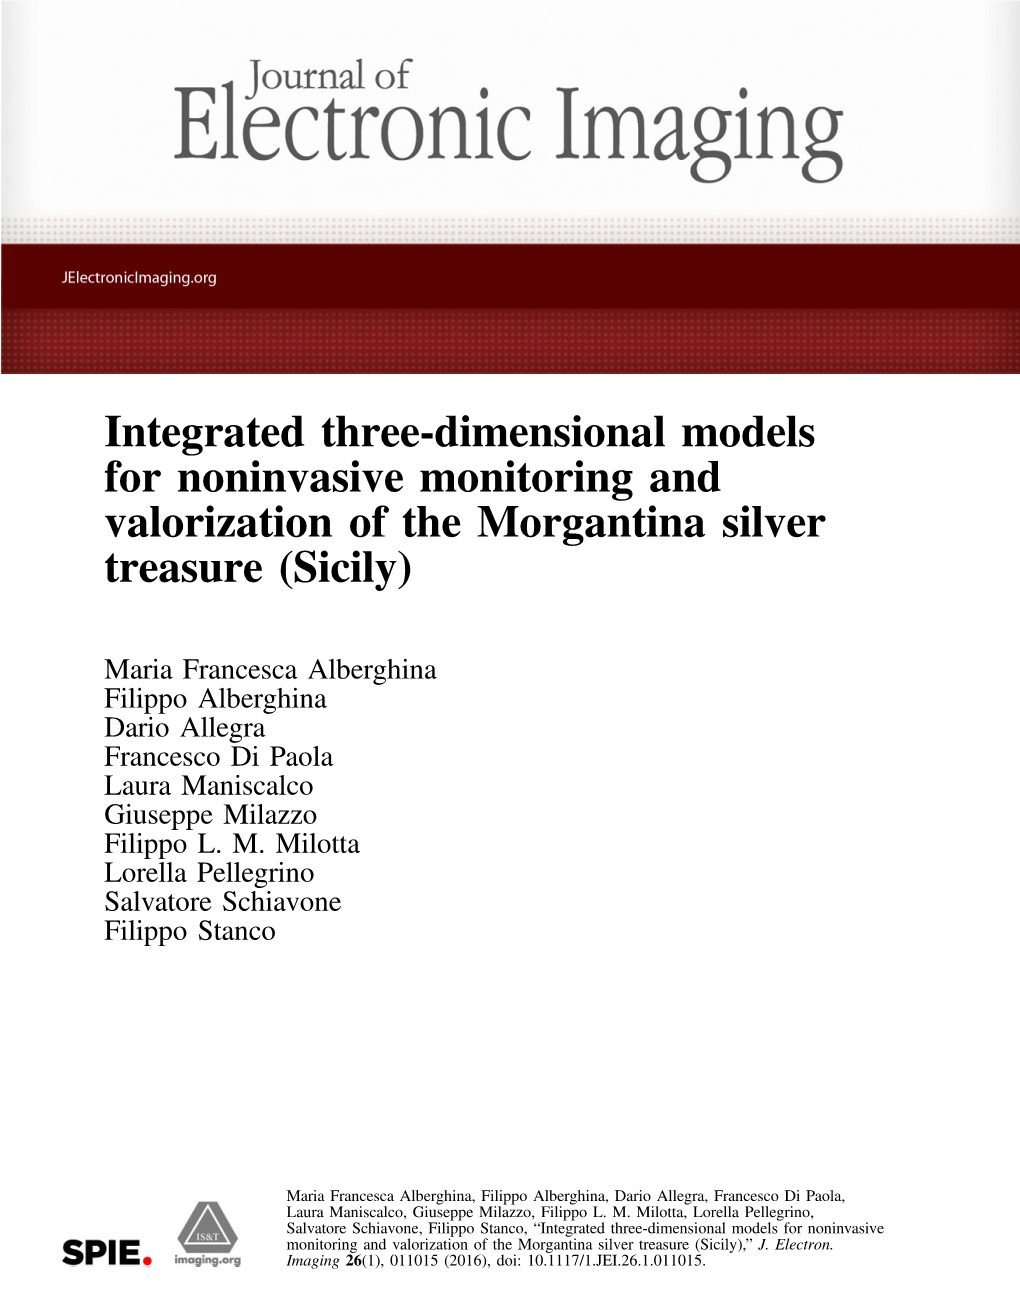 Integrated Three-Dimensional Models for Noninvasive Monitoring and Valorization of the Morgantina Silver Treasure (Sicily)